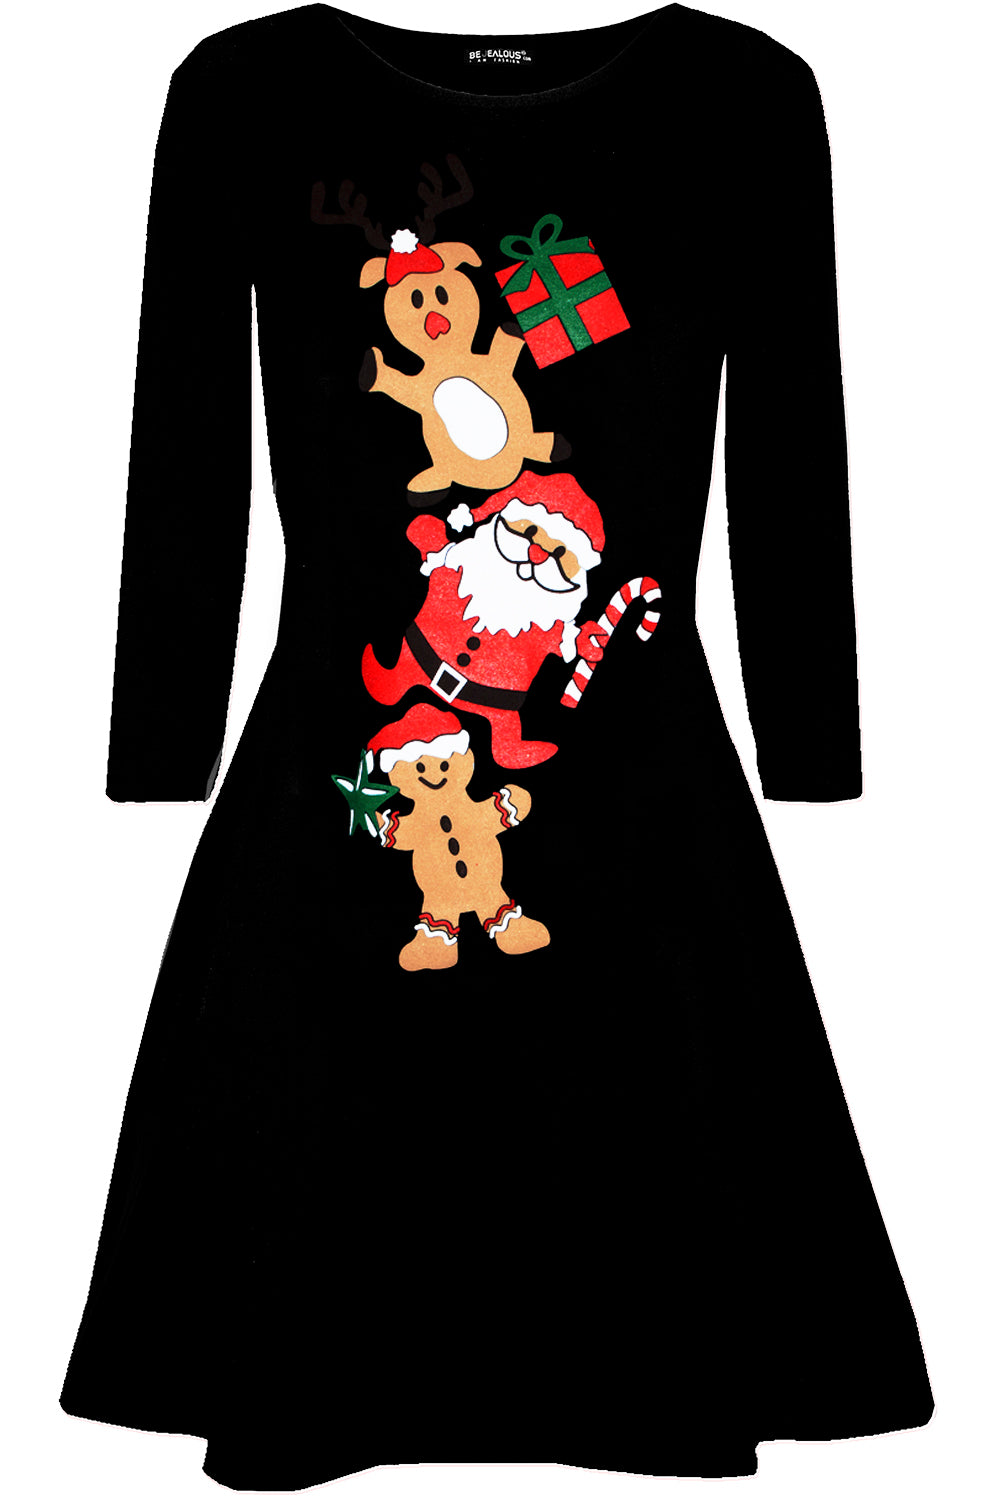 Long Sleeve Christmas Print Black Dress - bejealous-com